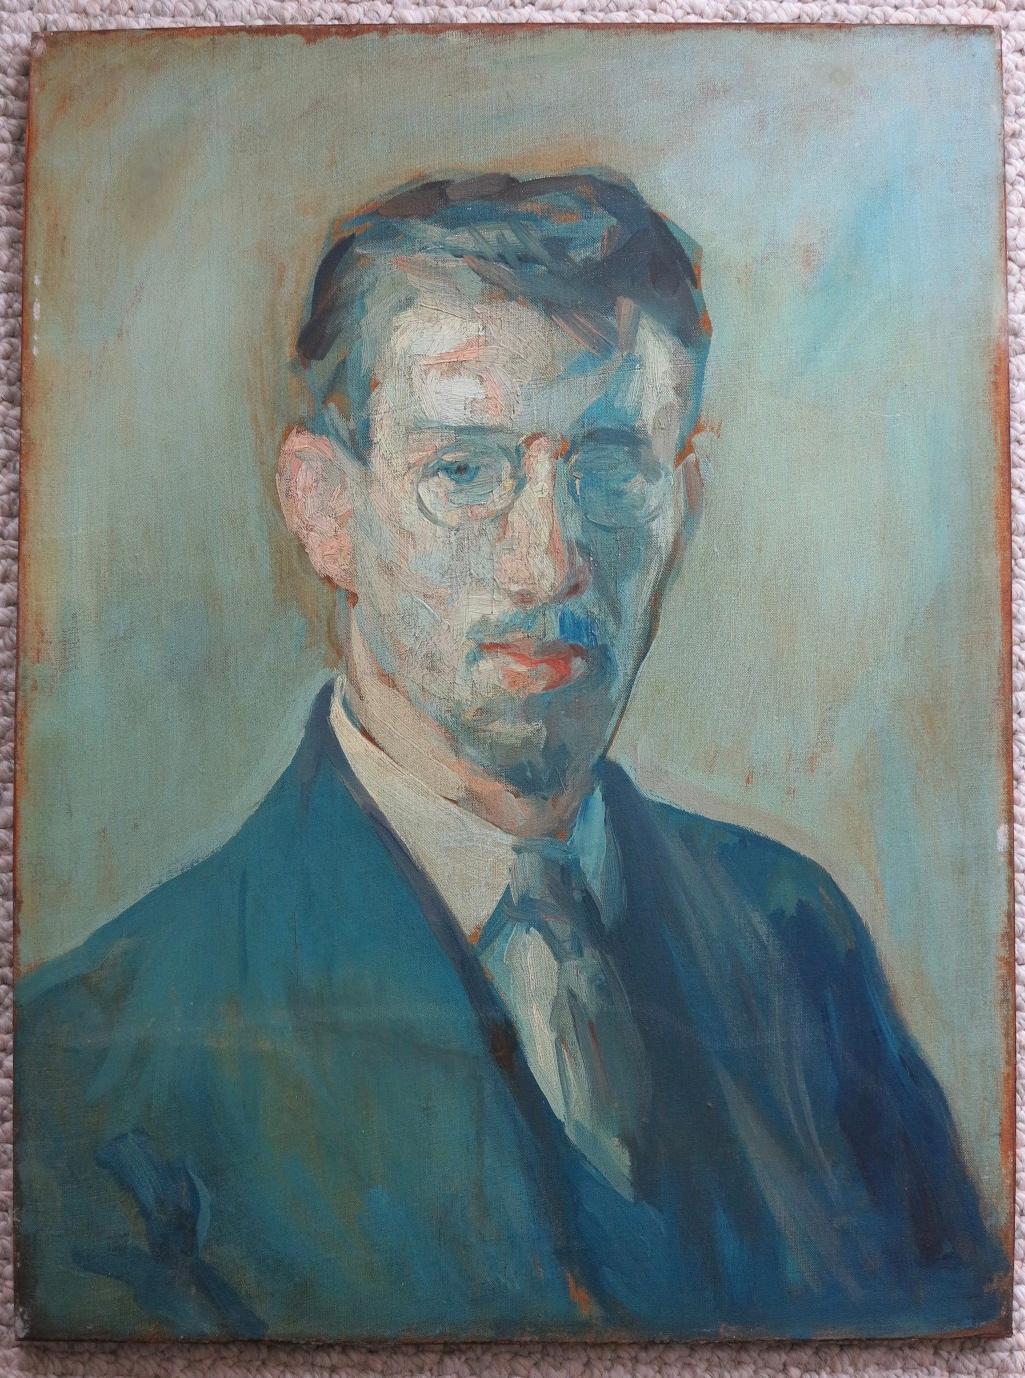 Unknown Portrait Painting - Portrait of a Young Man